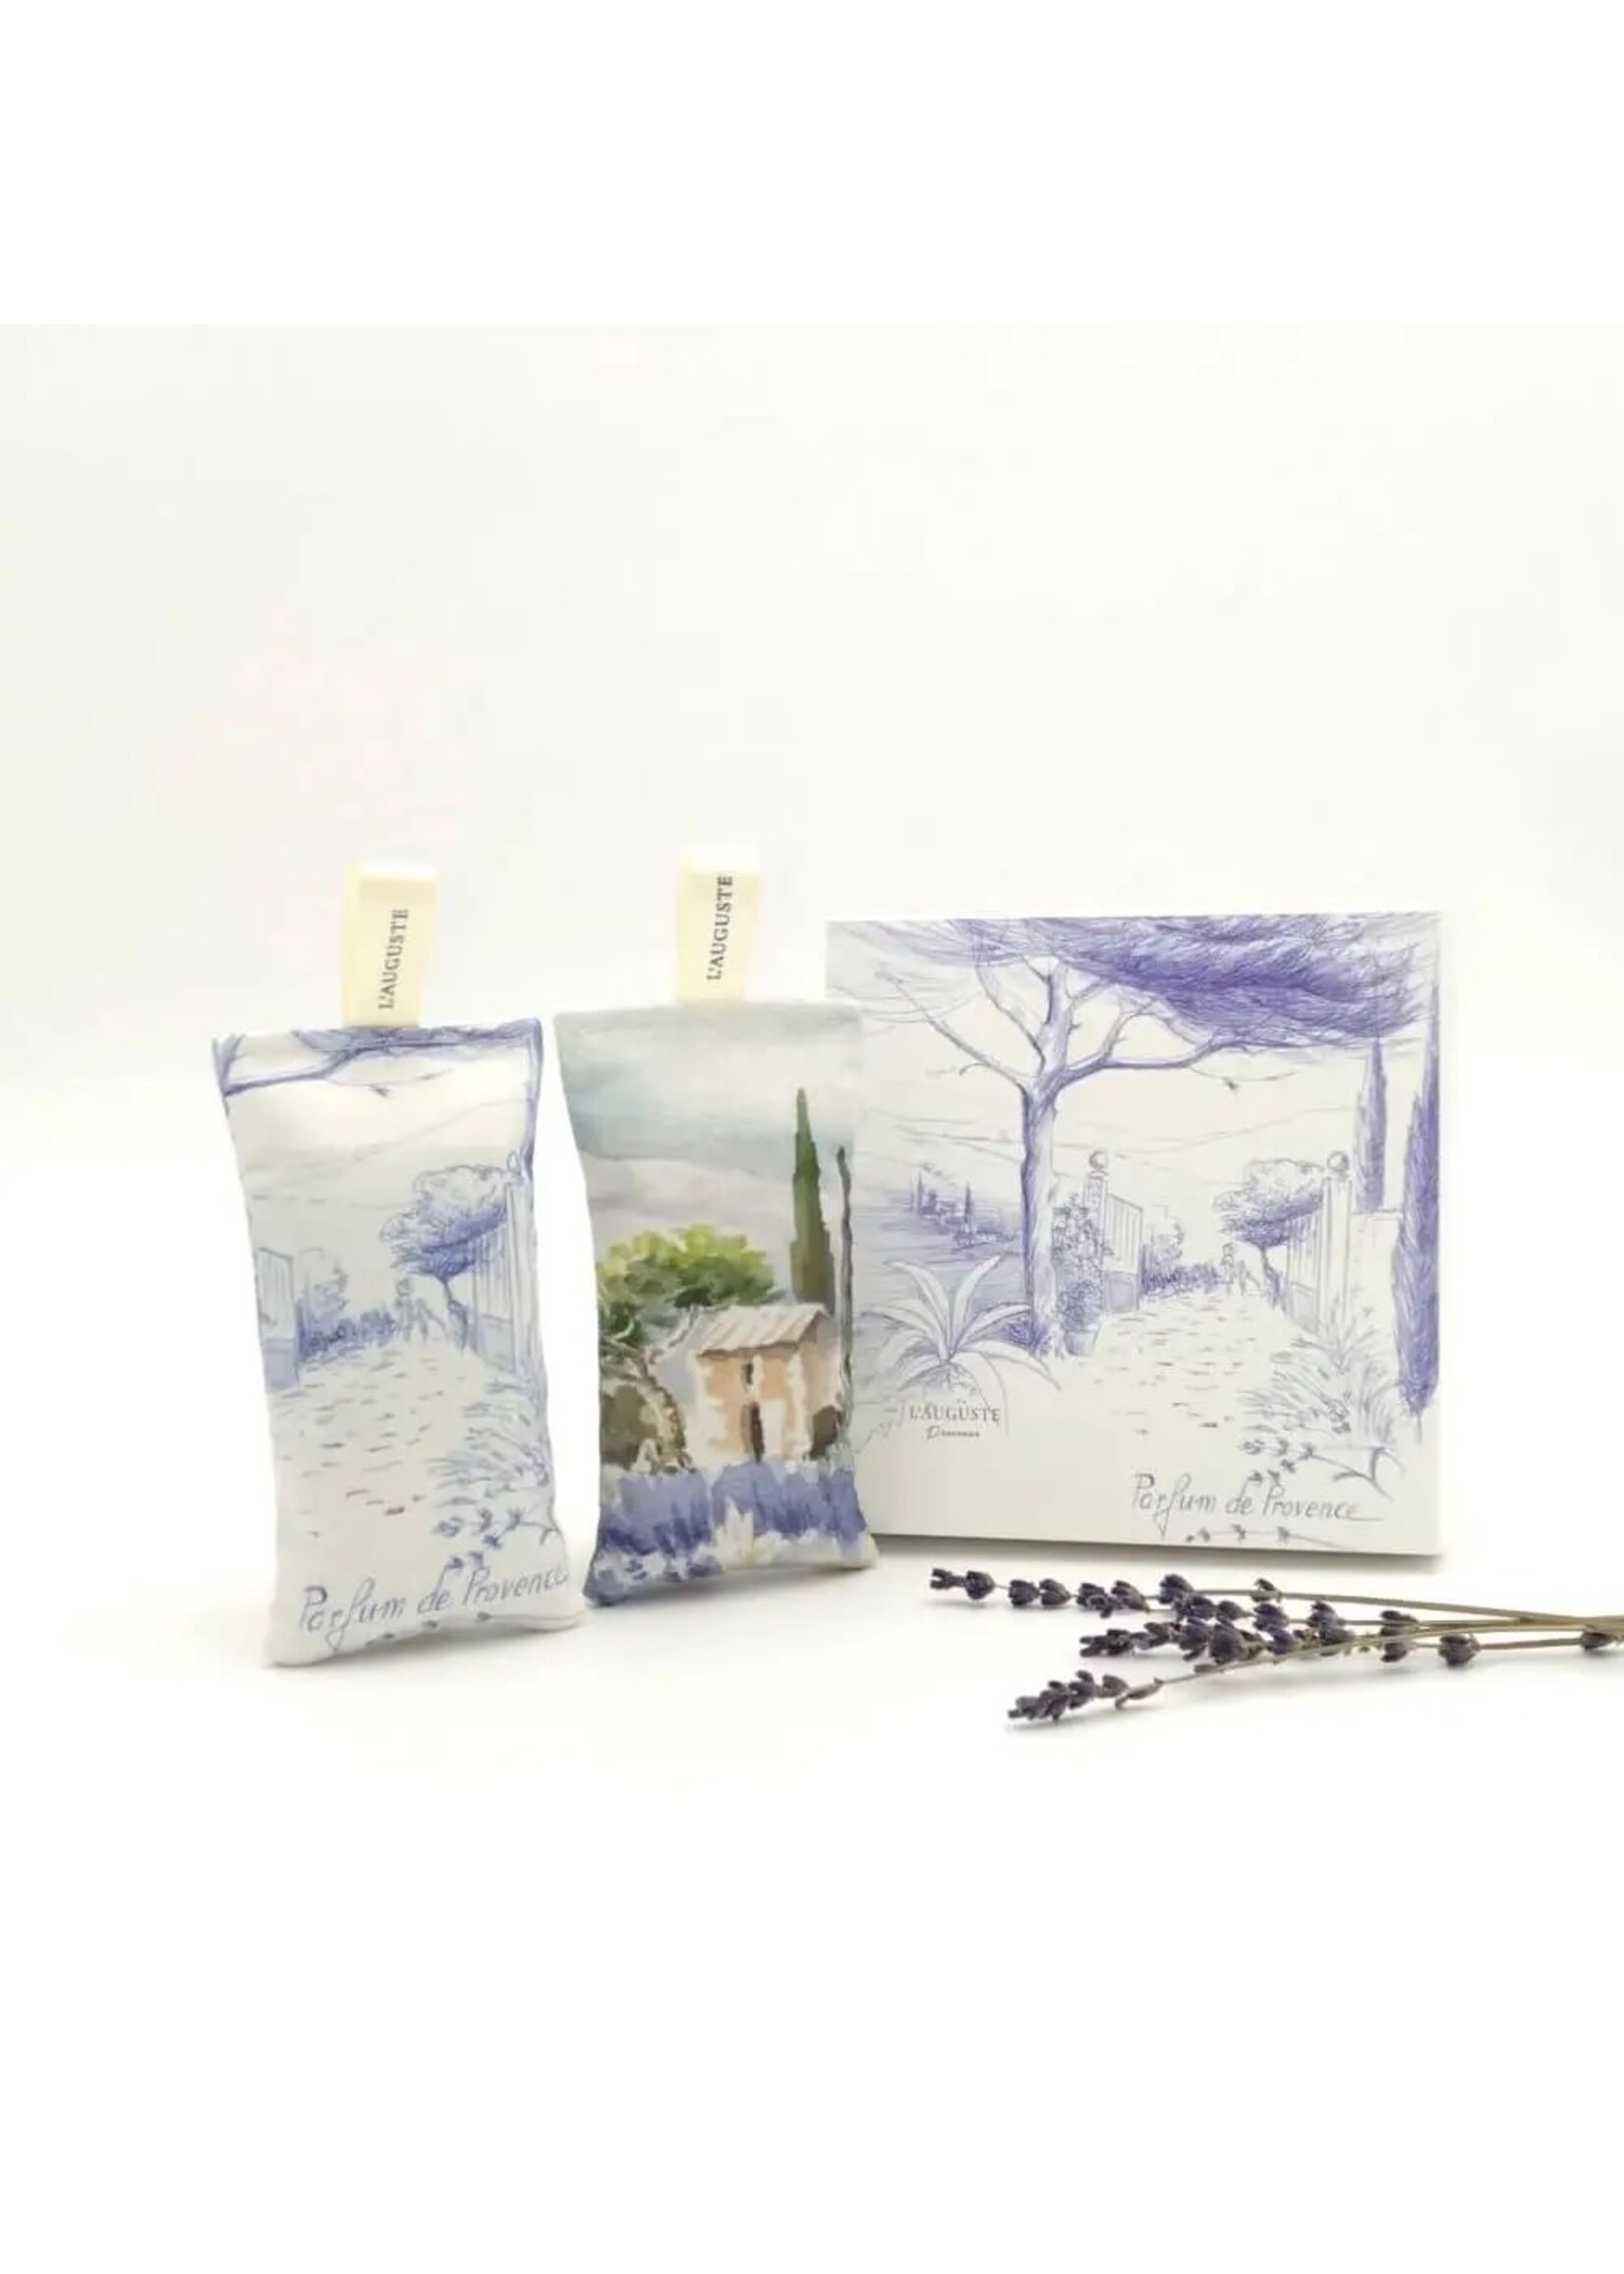 Lavender Sachet from Provence - Set of 2 - Cabanon & Parfum